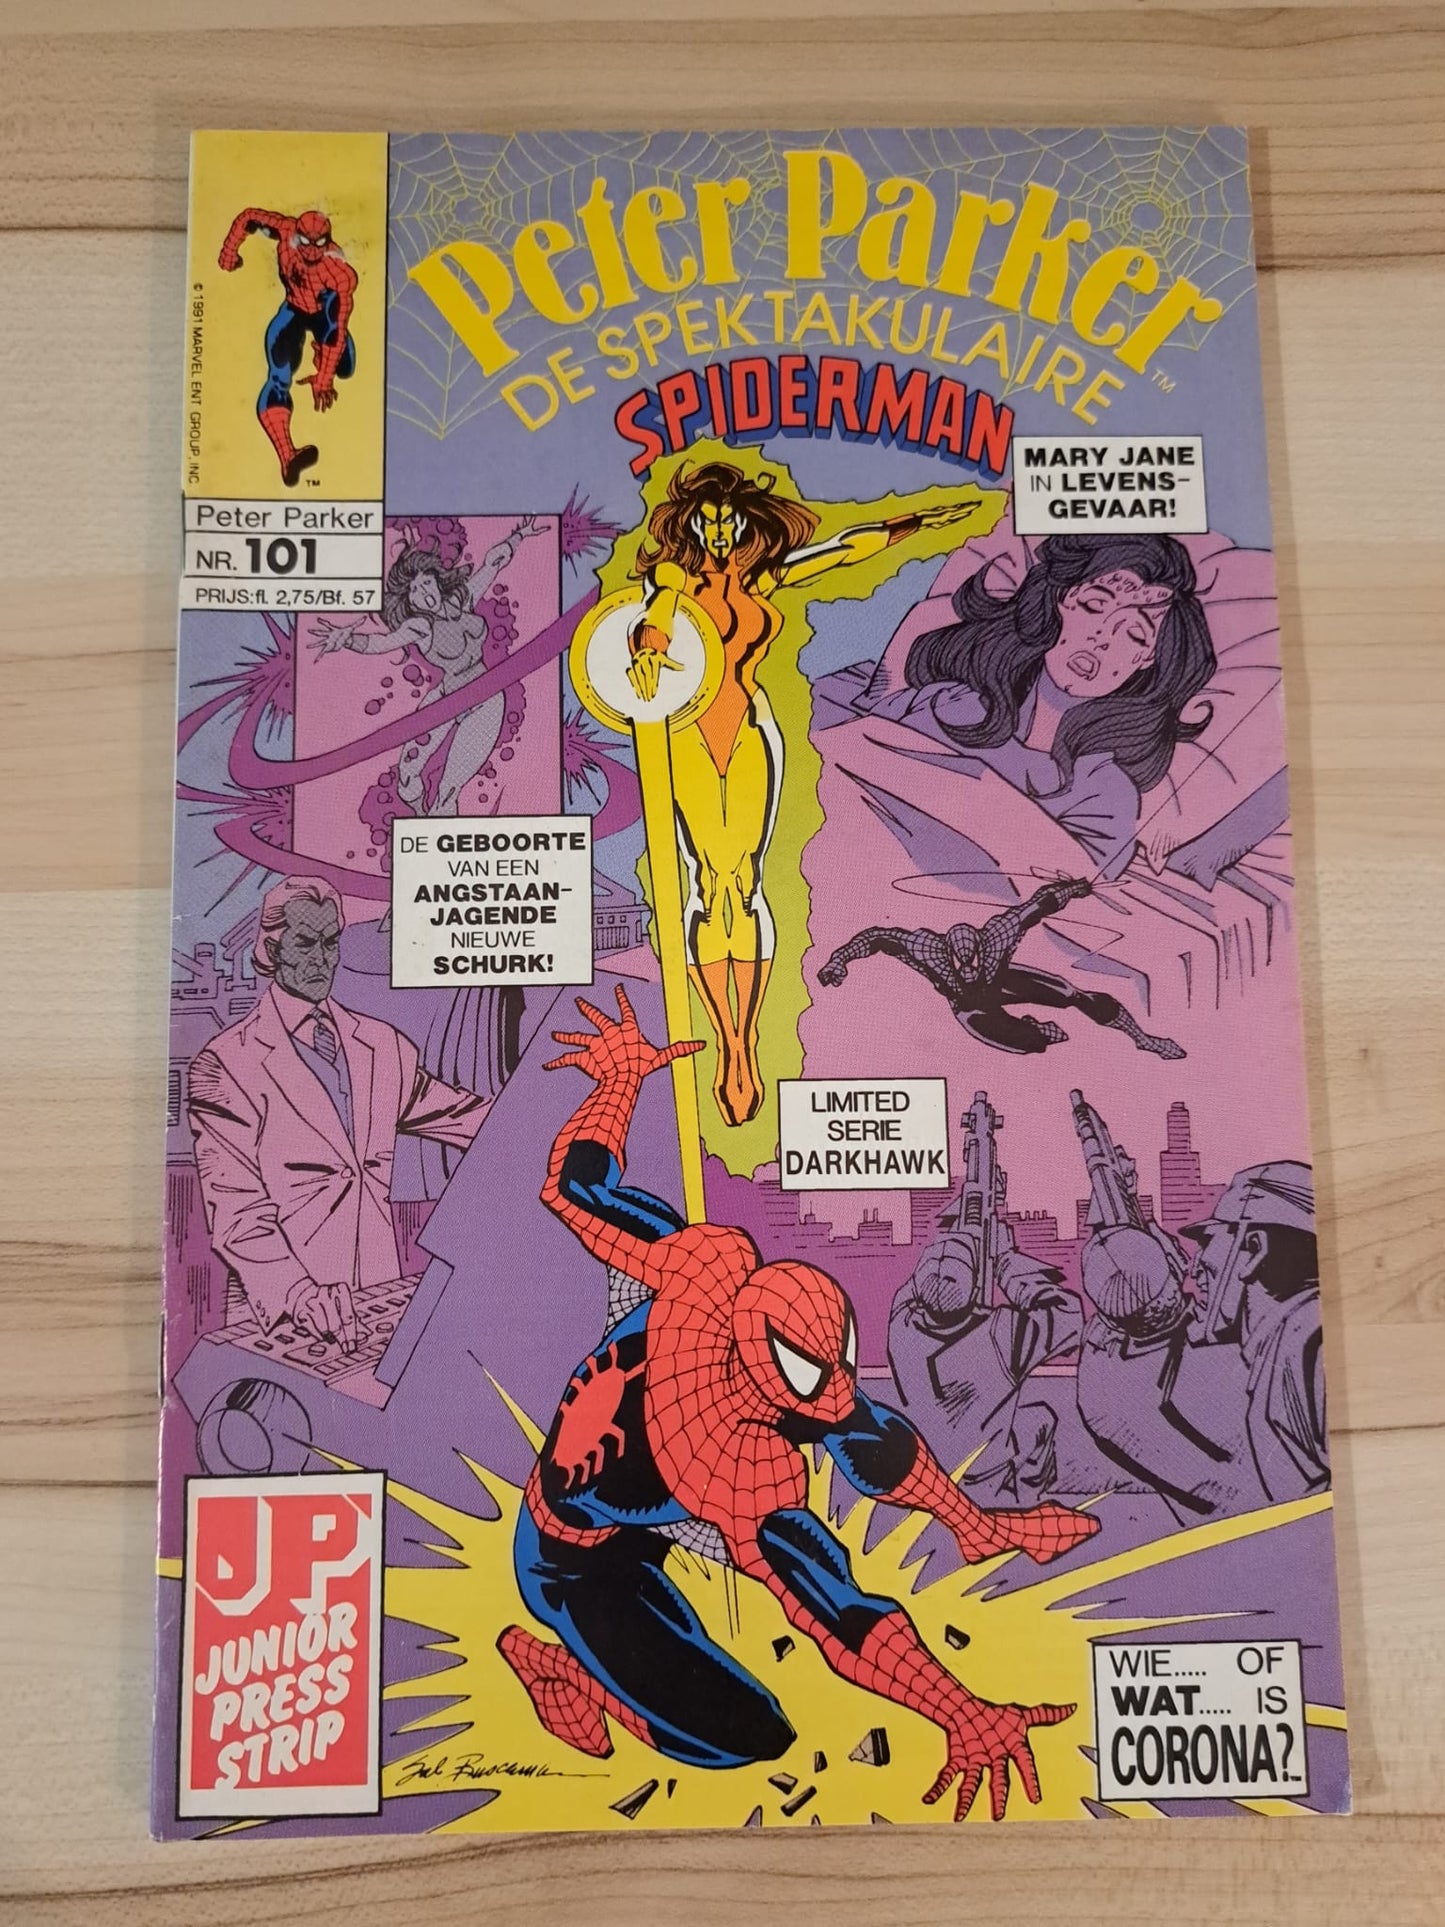 Peter Parker De spektakulaire spiderman #101